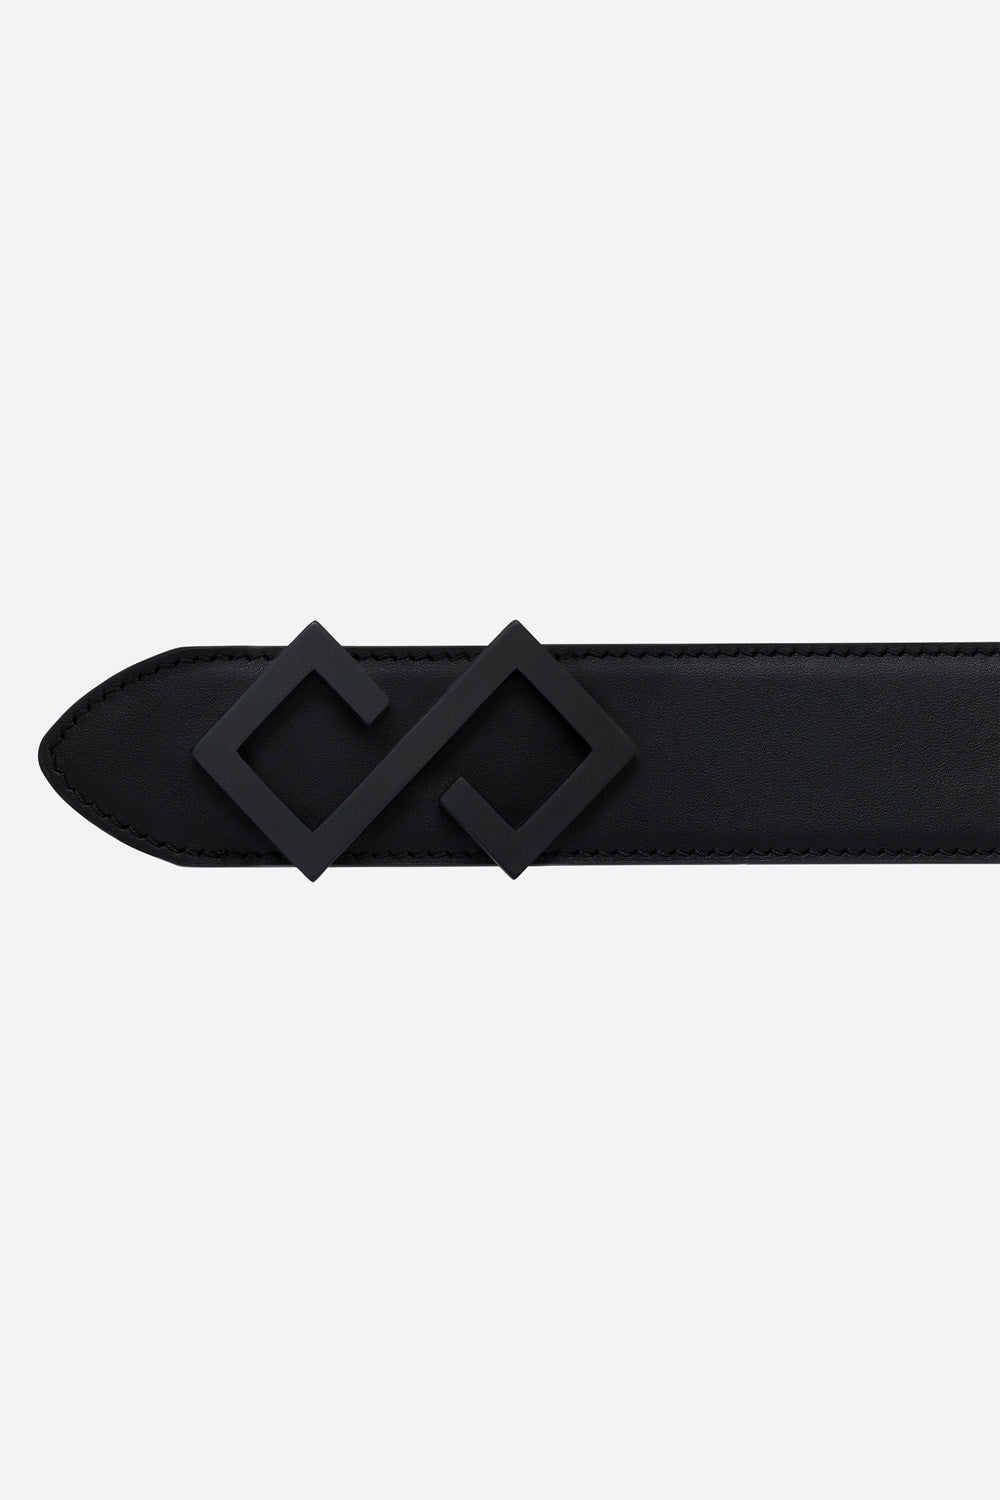 Men's Alvear Belt in Black, Matte Black Buckle Wide 1.5 (3.8 cm) M/L